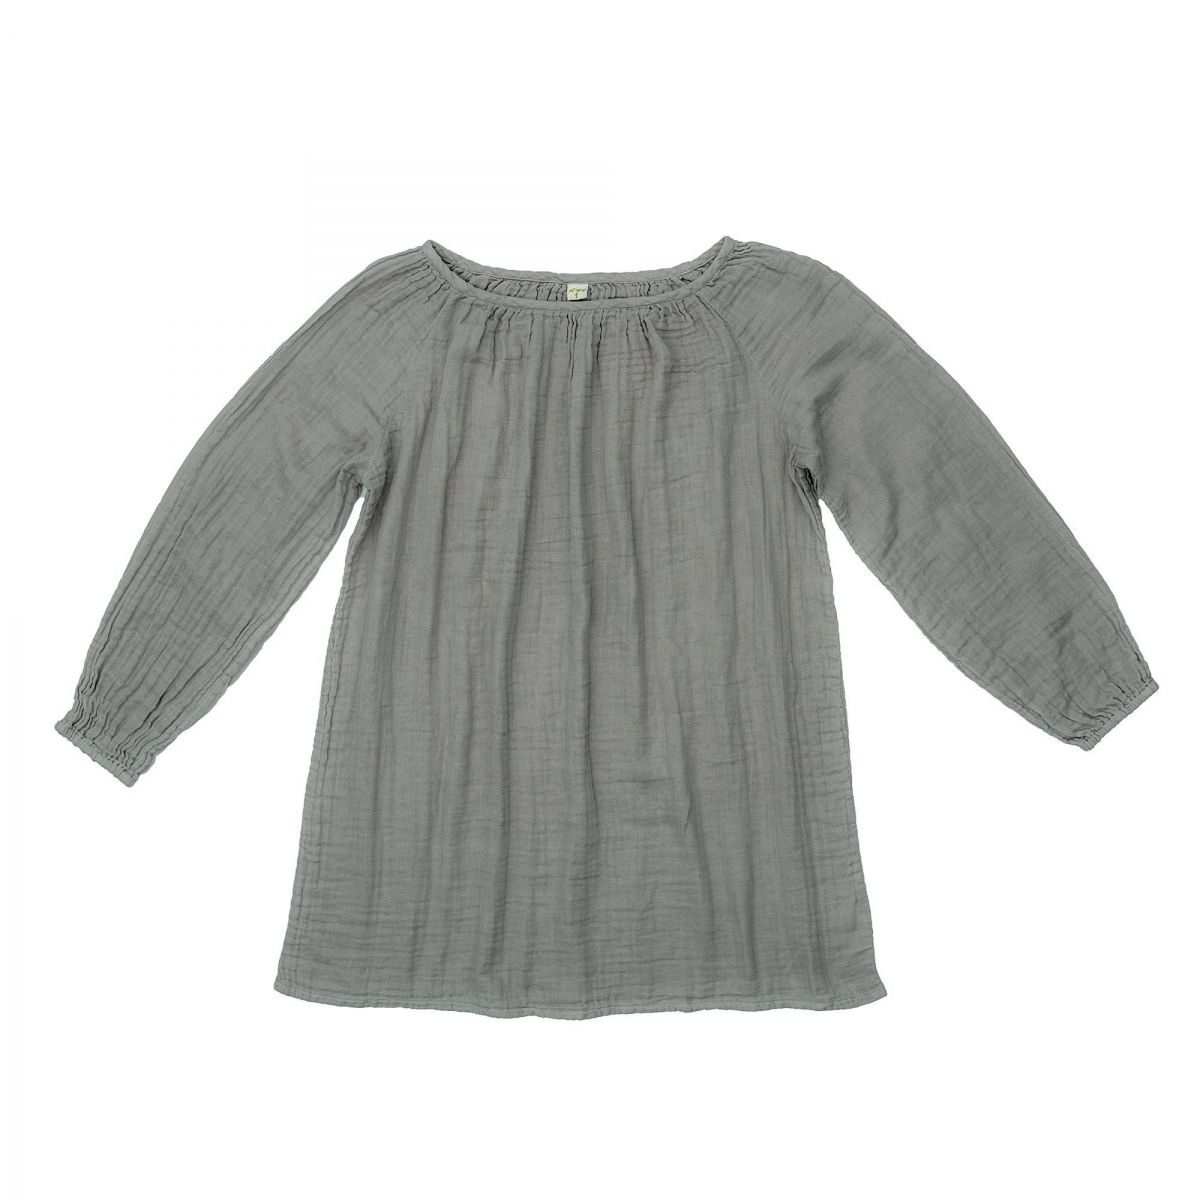 Numero 74 - Tunic for mum Nina silver grey - Blusas y túnicas - 